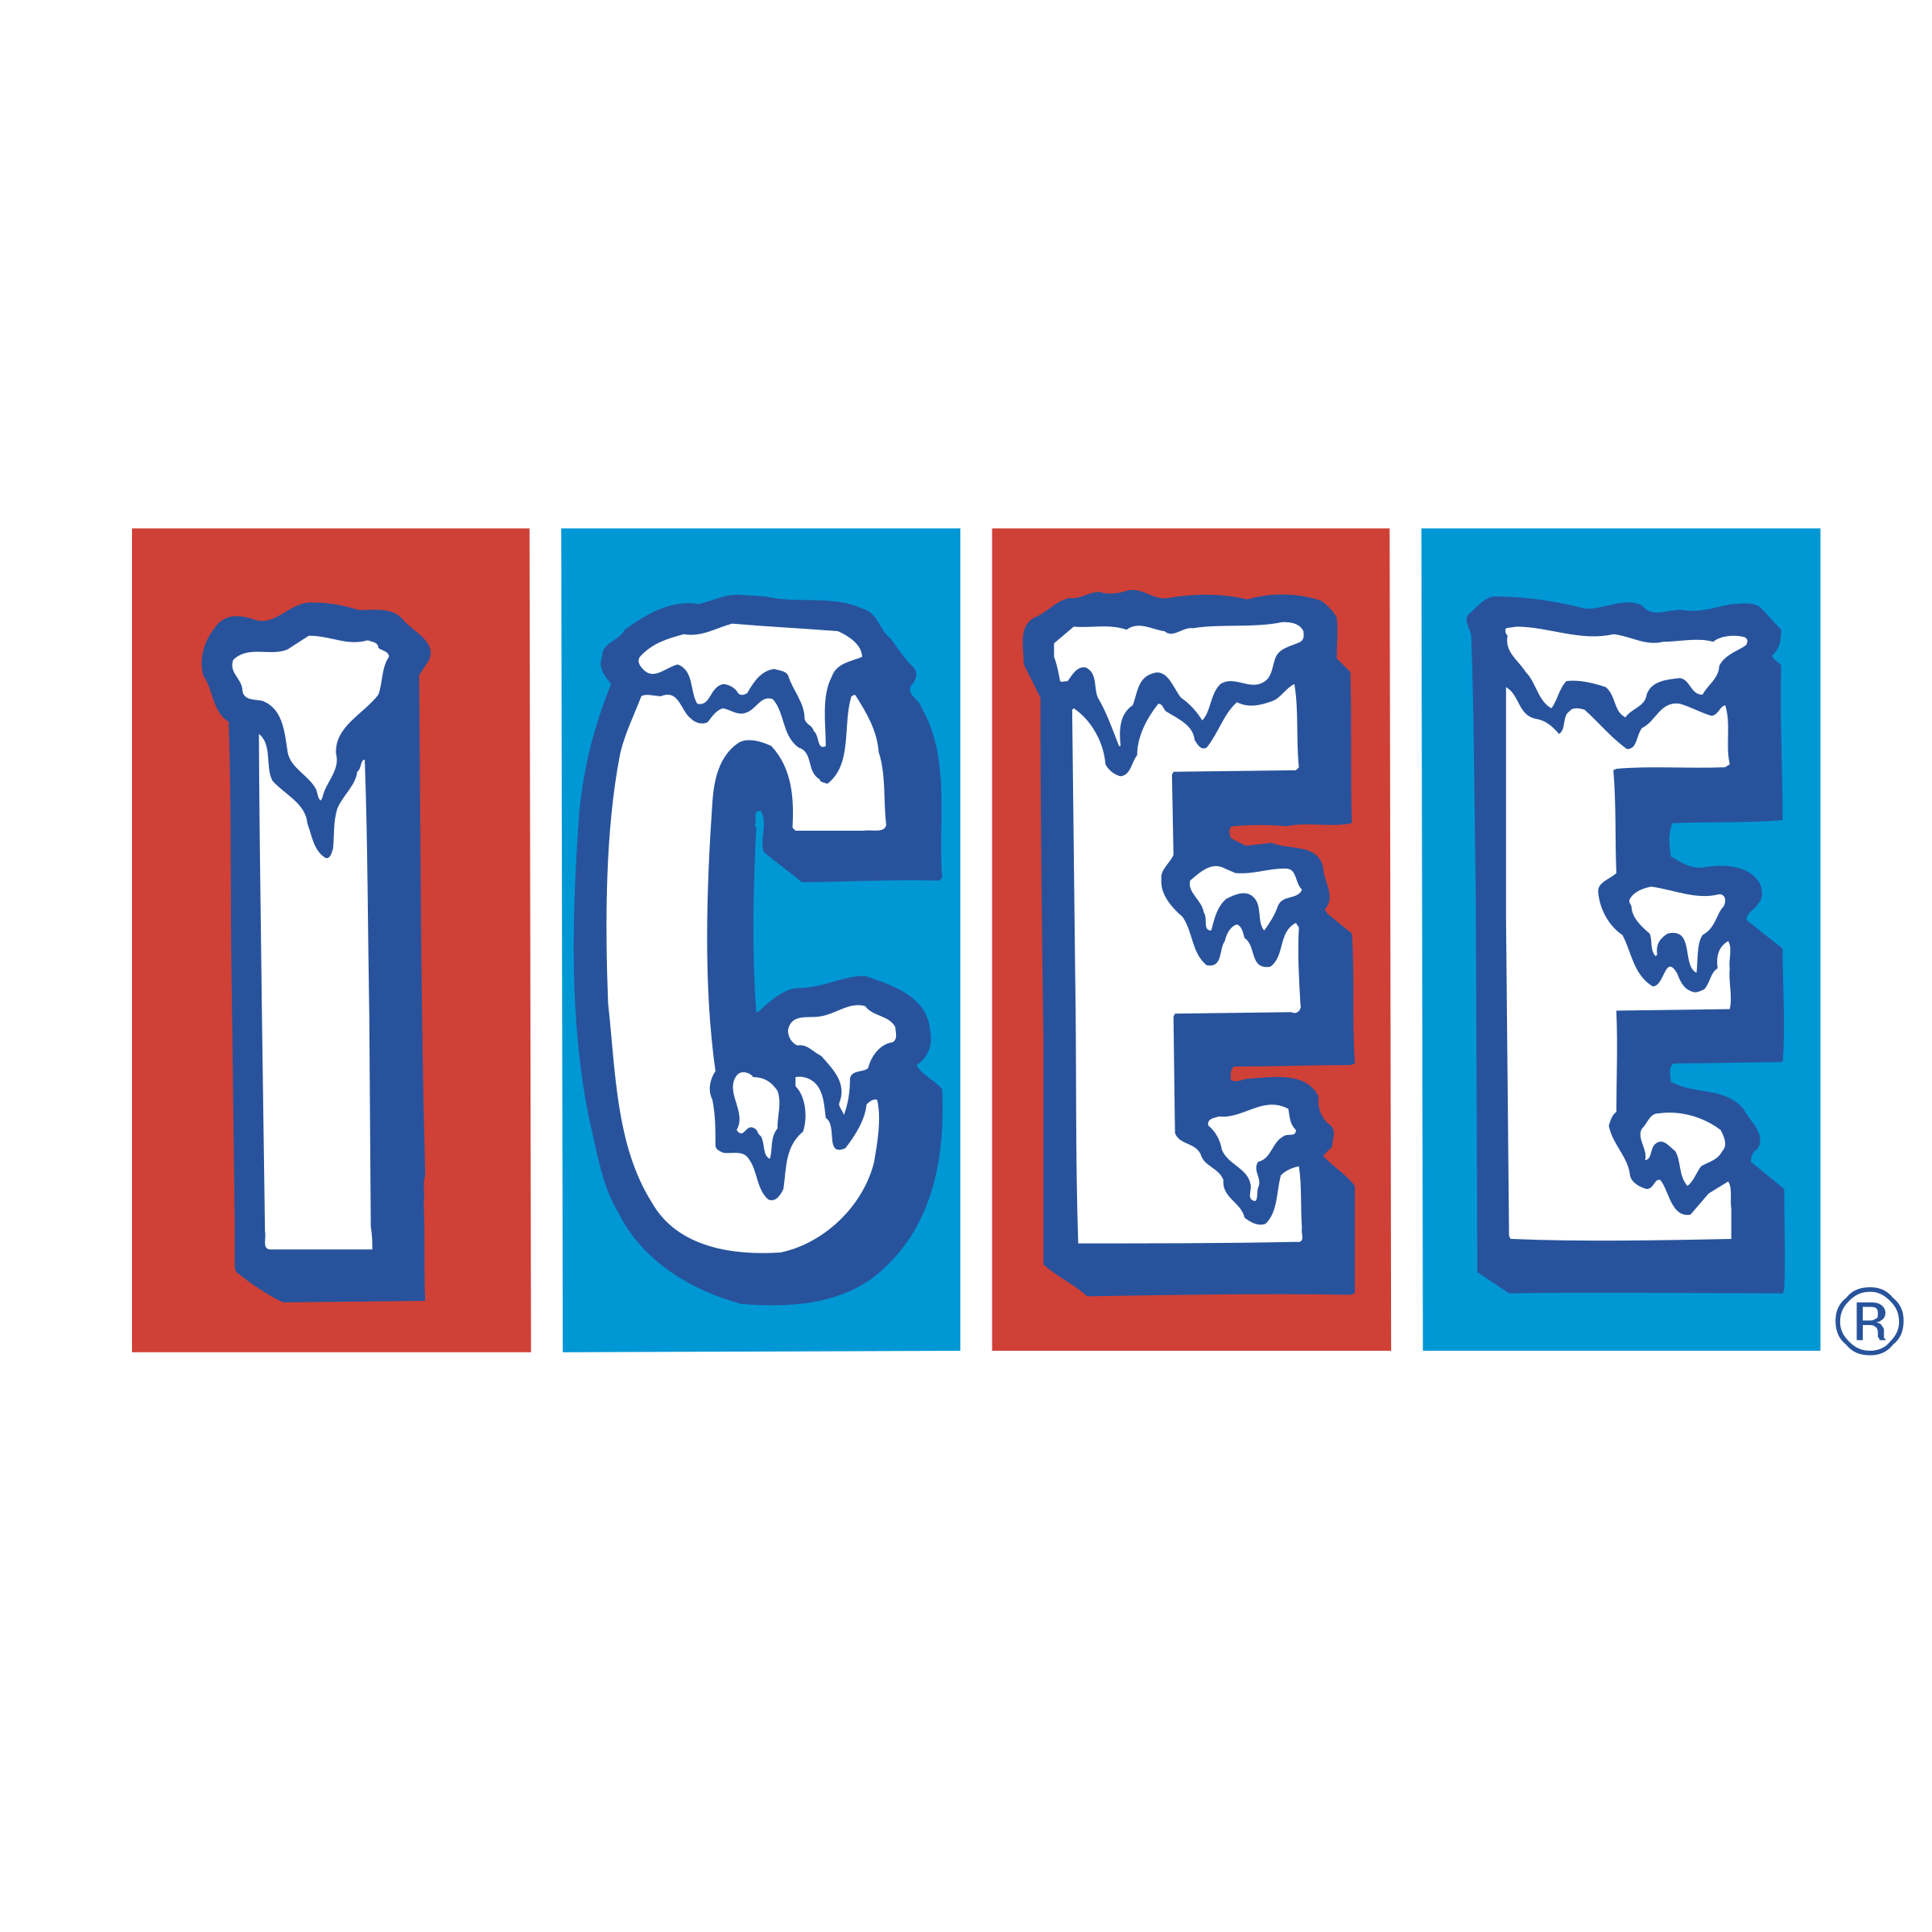 Icee Logo - Icee Logo PNG Transparent & SVG Vector - Freebie Supply